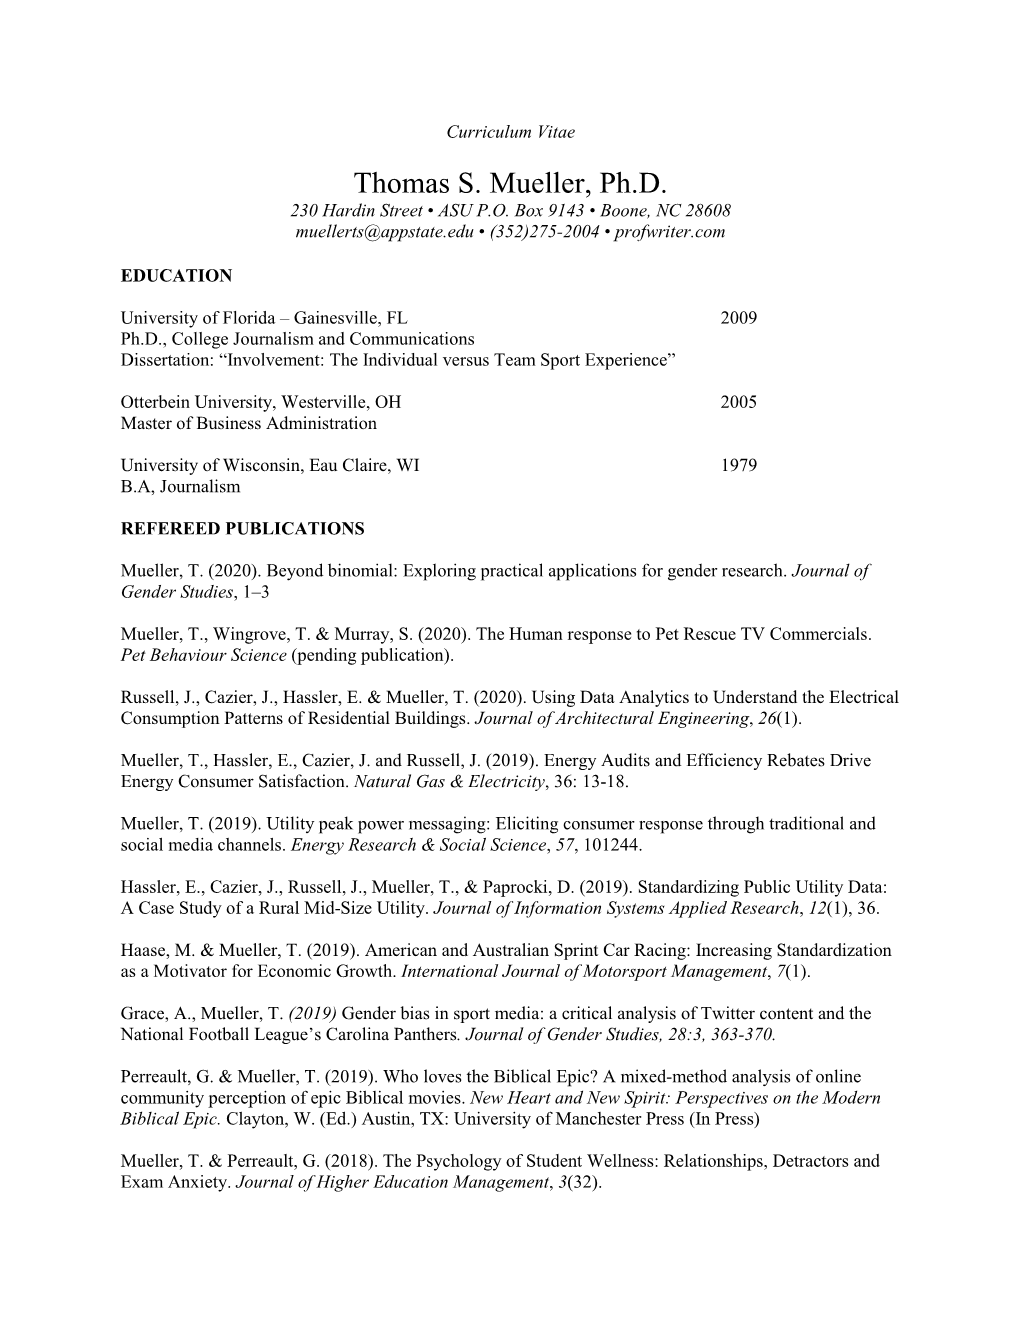 Thomas S. Mueller, Ph.D. 230 Hardin Street • ASU P.O